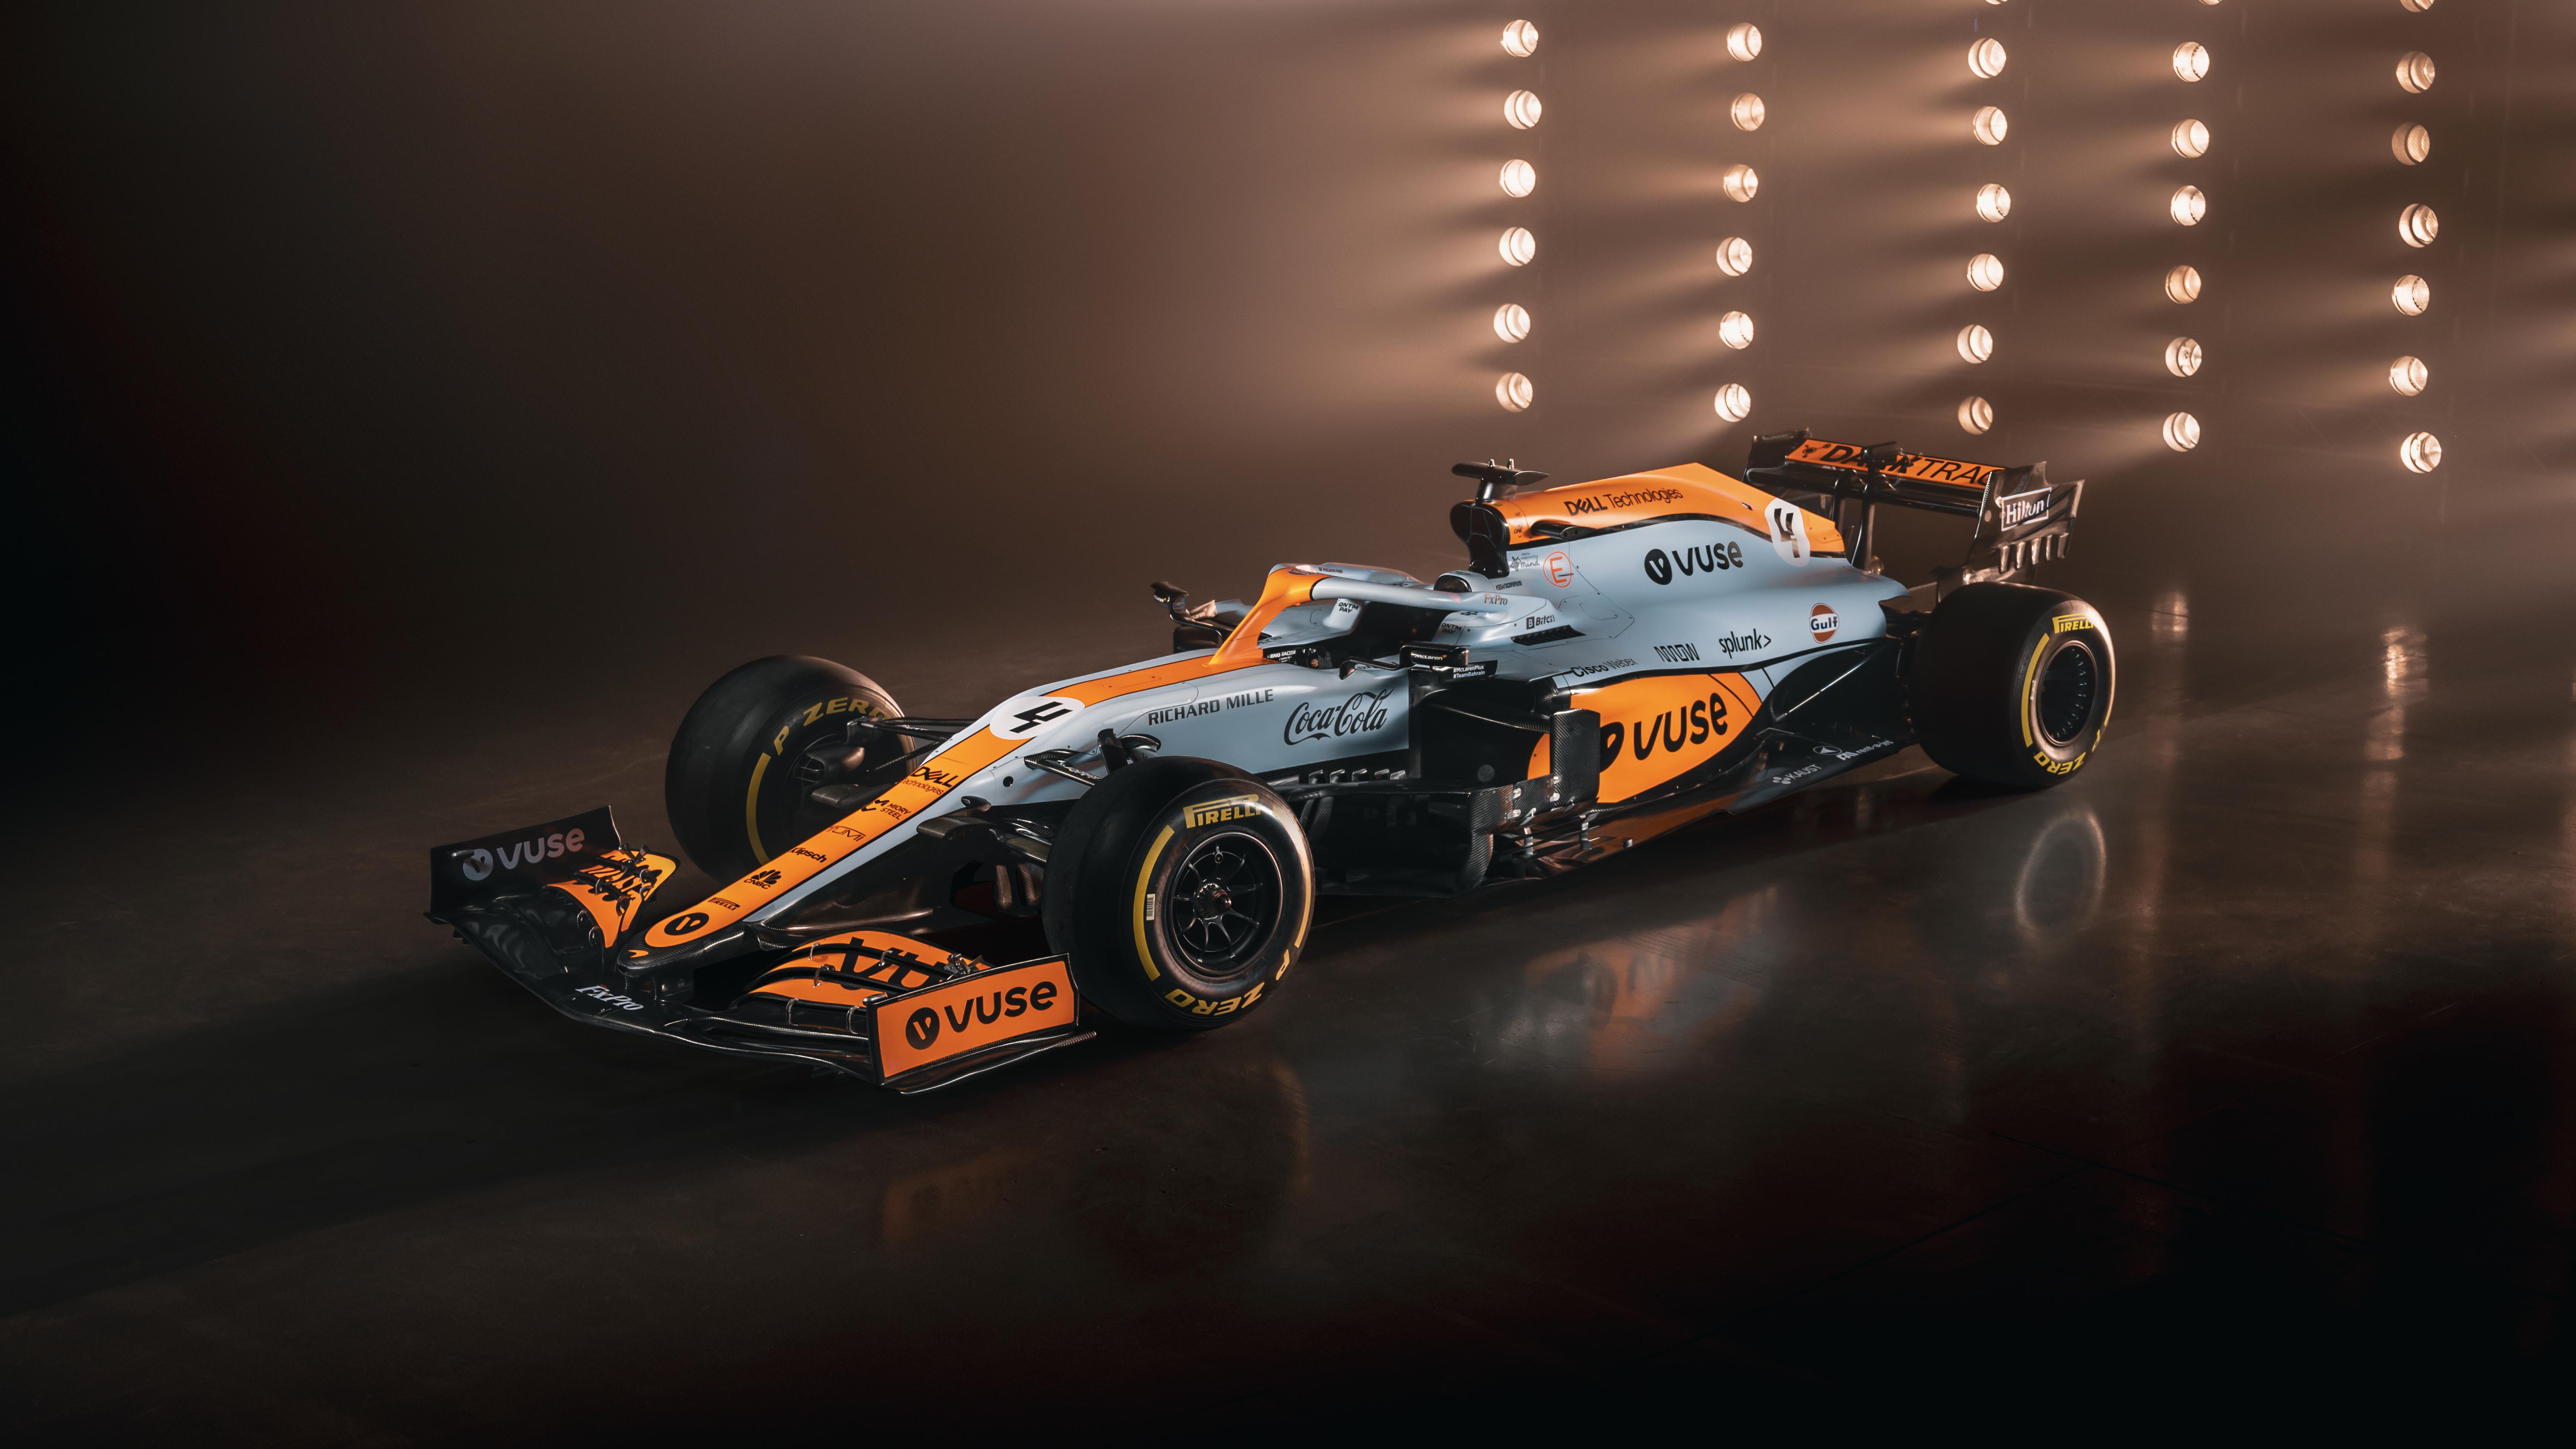 McLaren Gulf livery Lando Norris car for Monaco [6000 x 3375] Scrolller